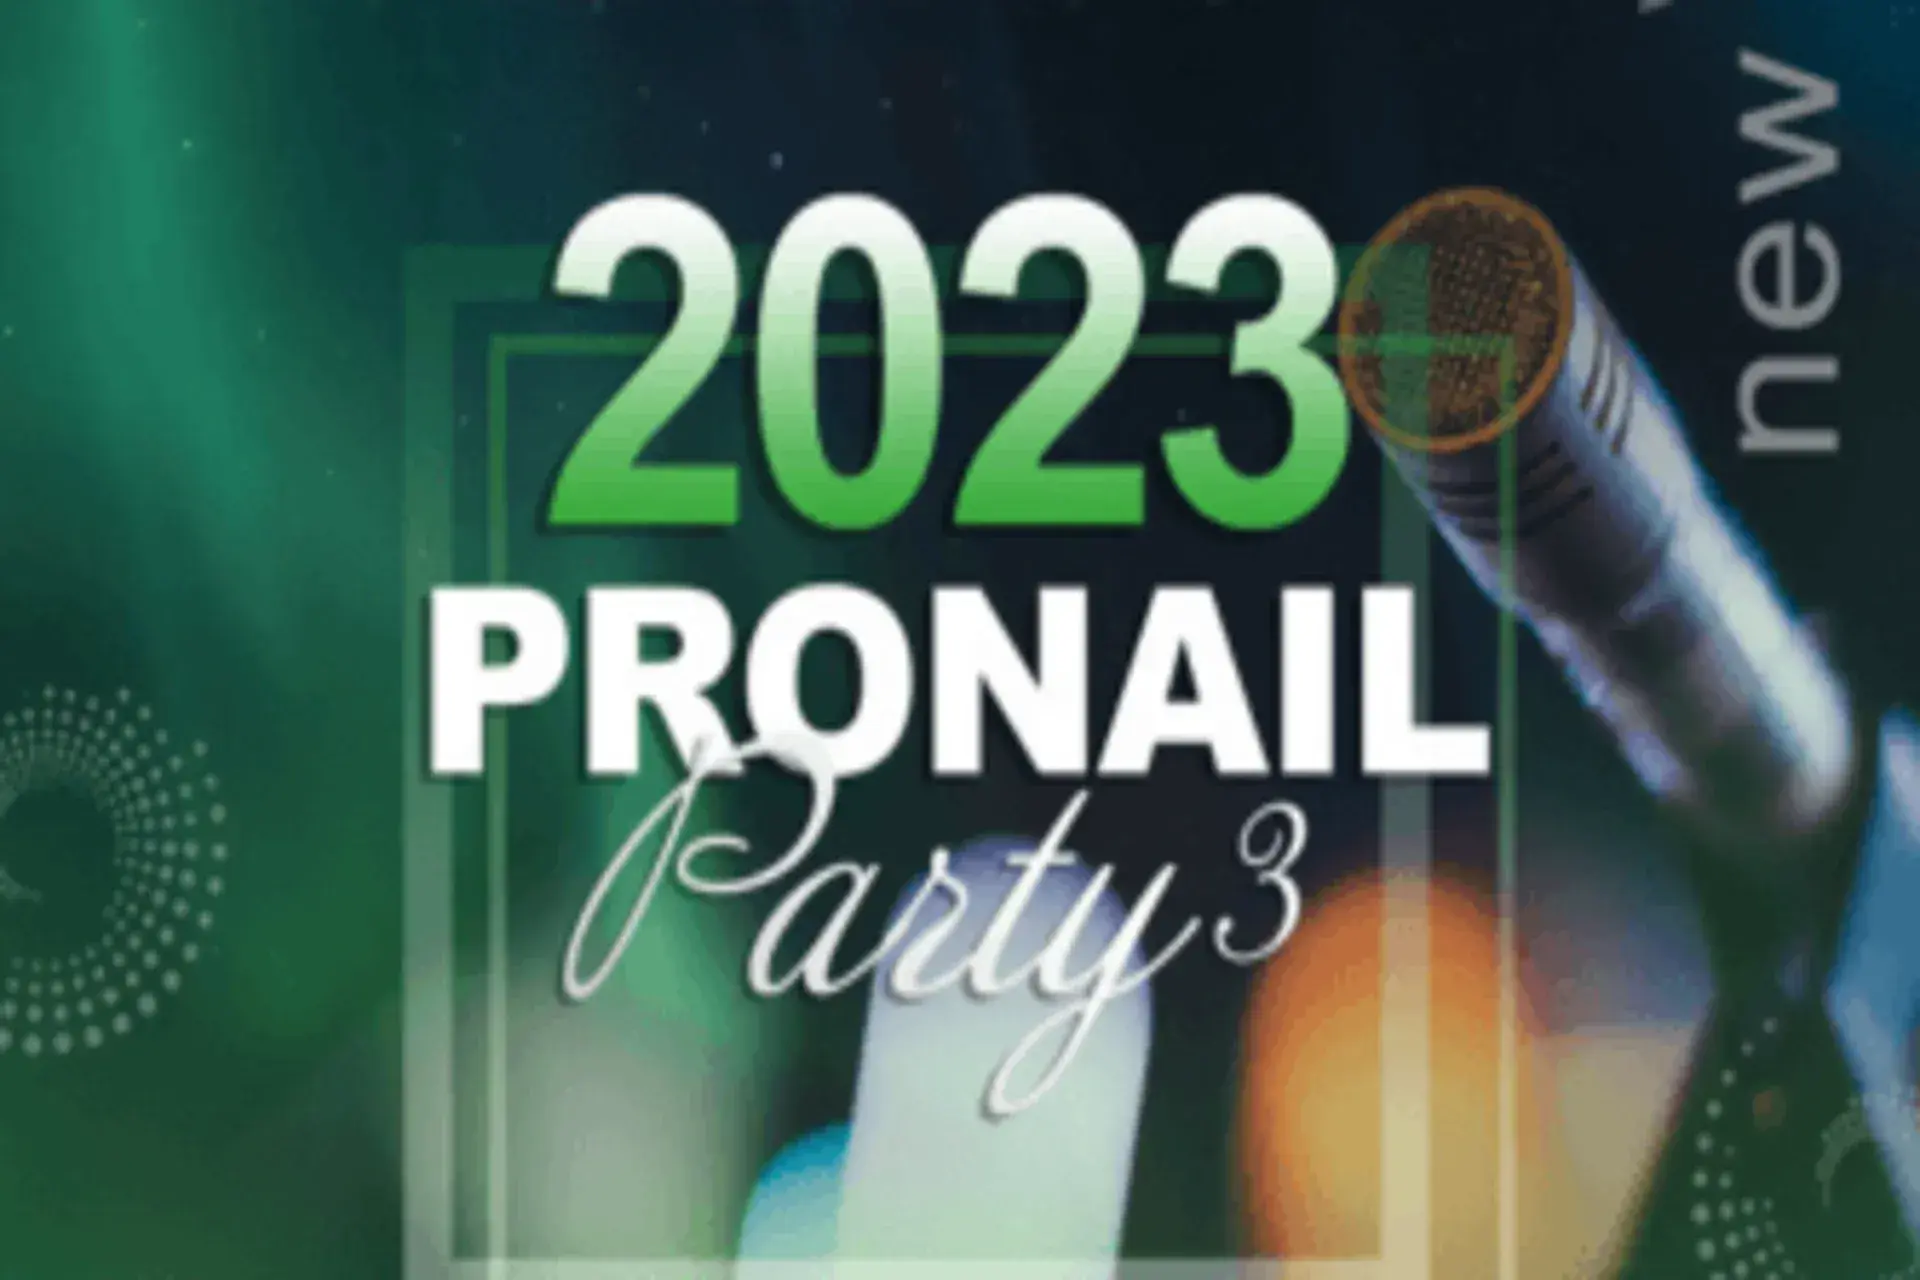 PRONAIL PARTY 2023, Фото 2086